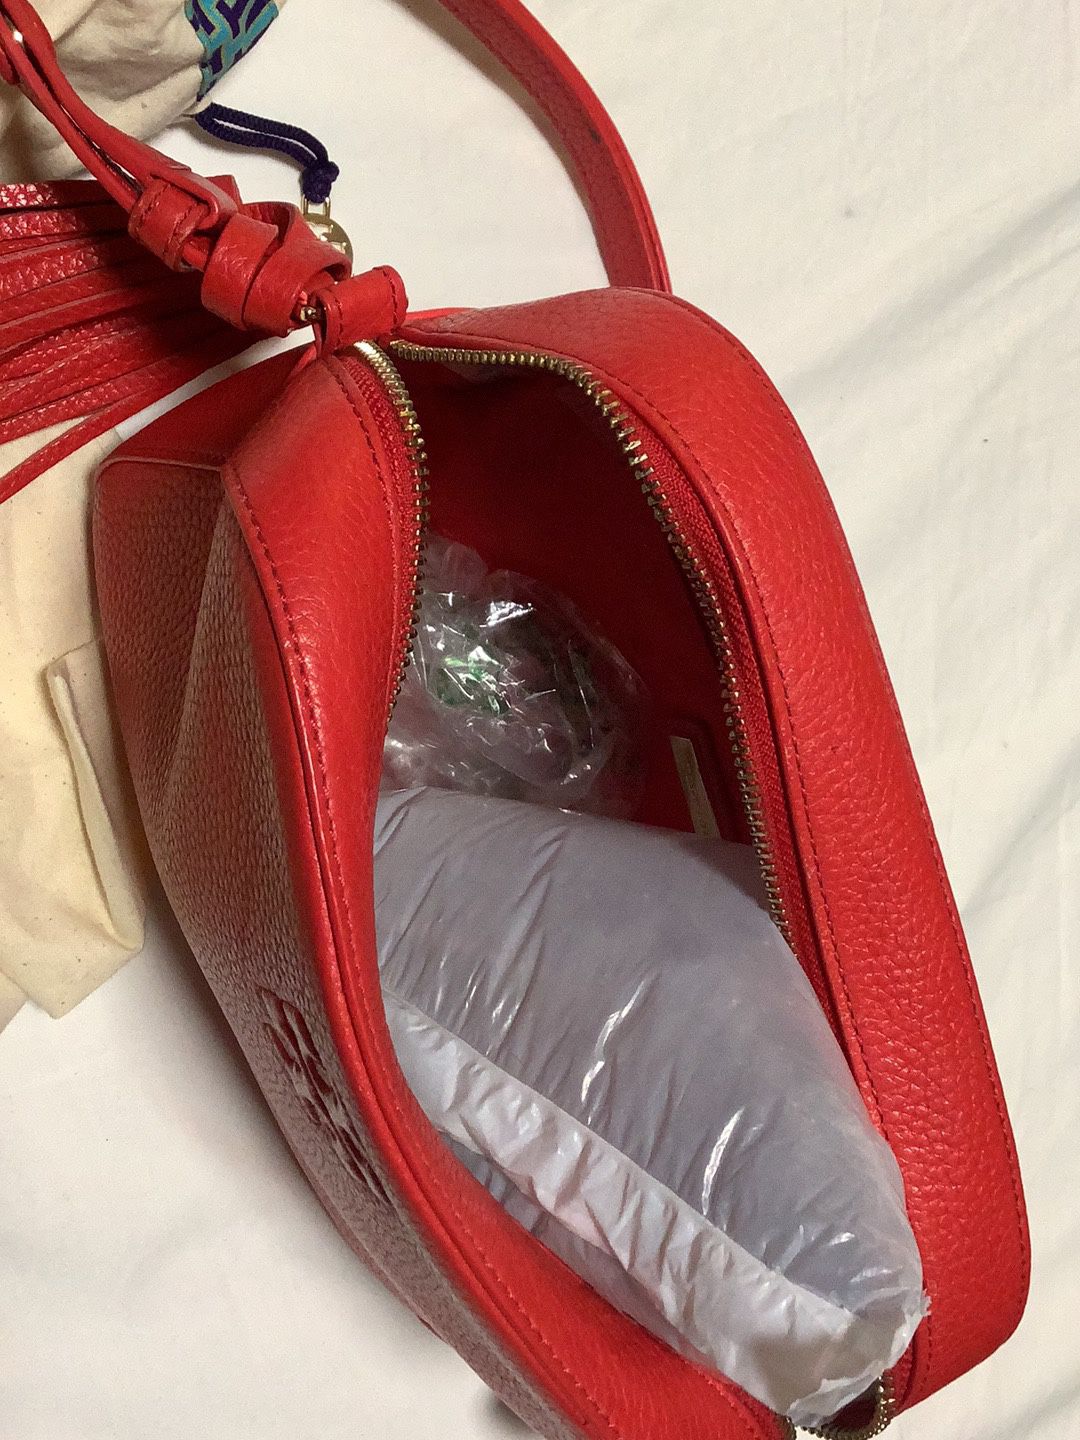 Original Tory Burch Bags (must get rid of them) for Sale in Petersburg, VA  - OfferUp